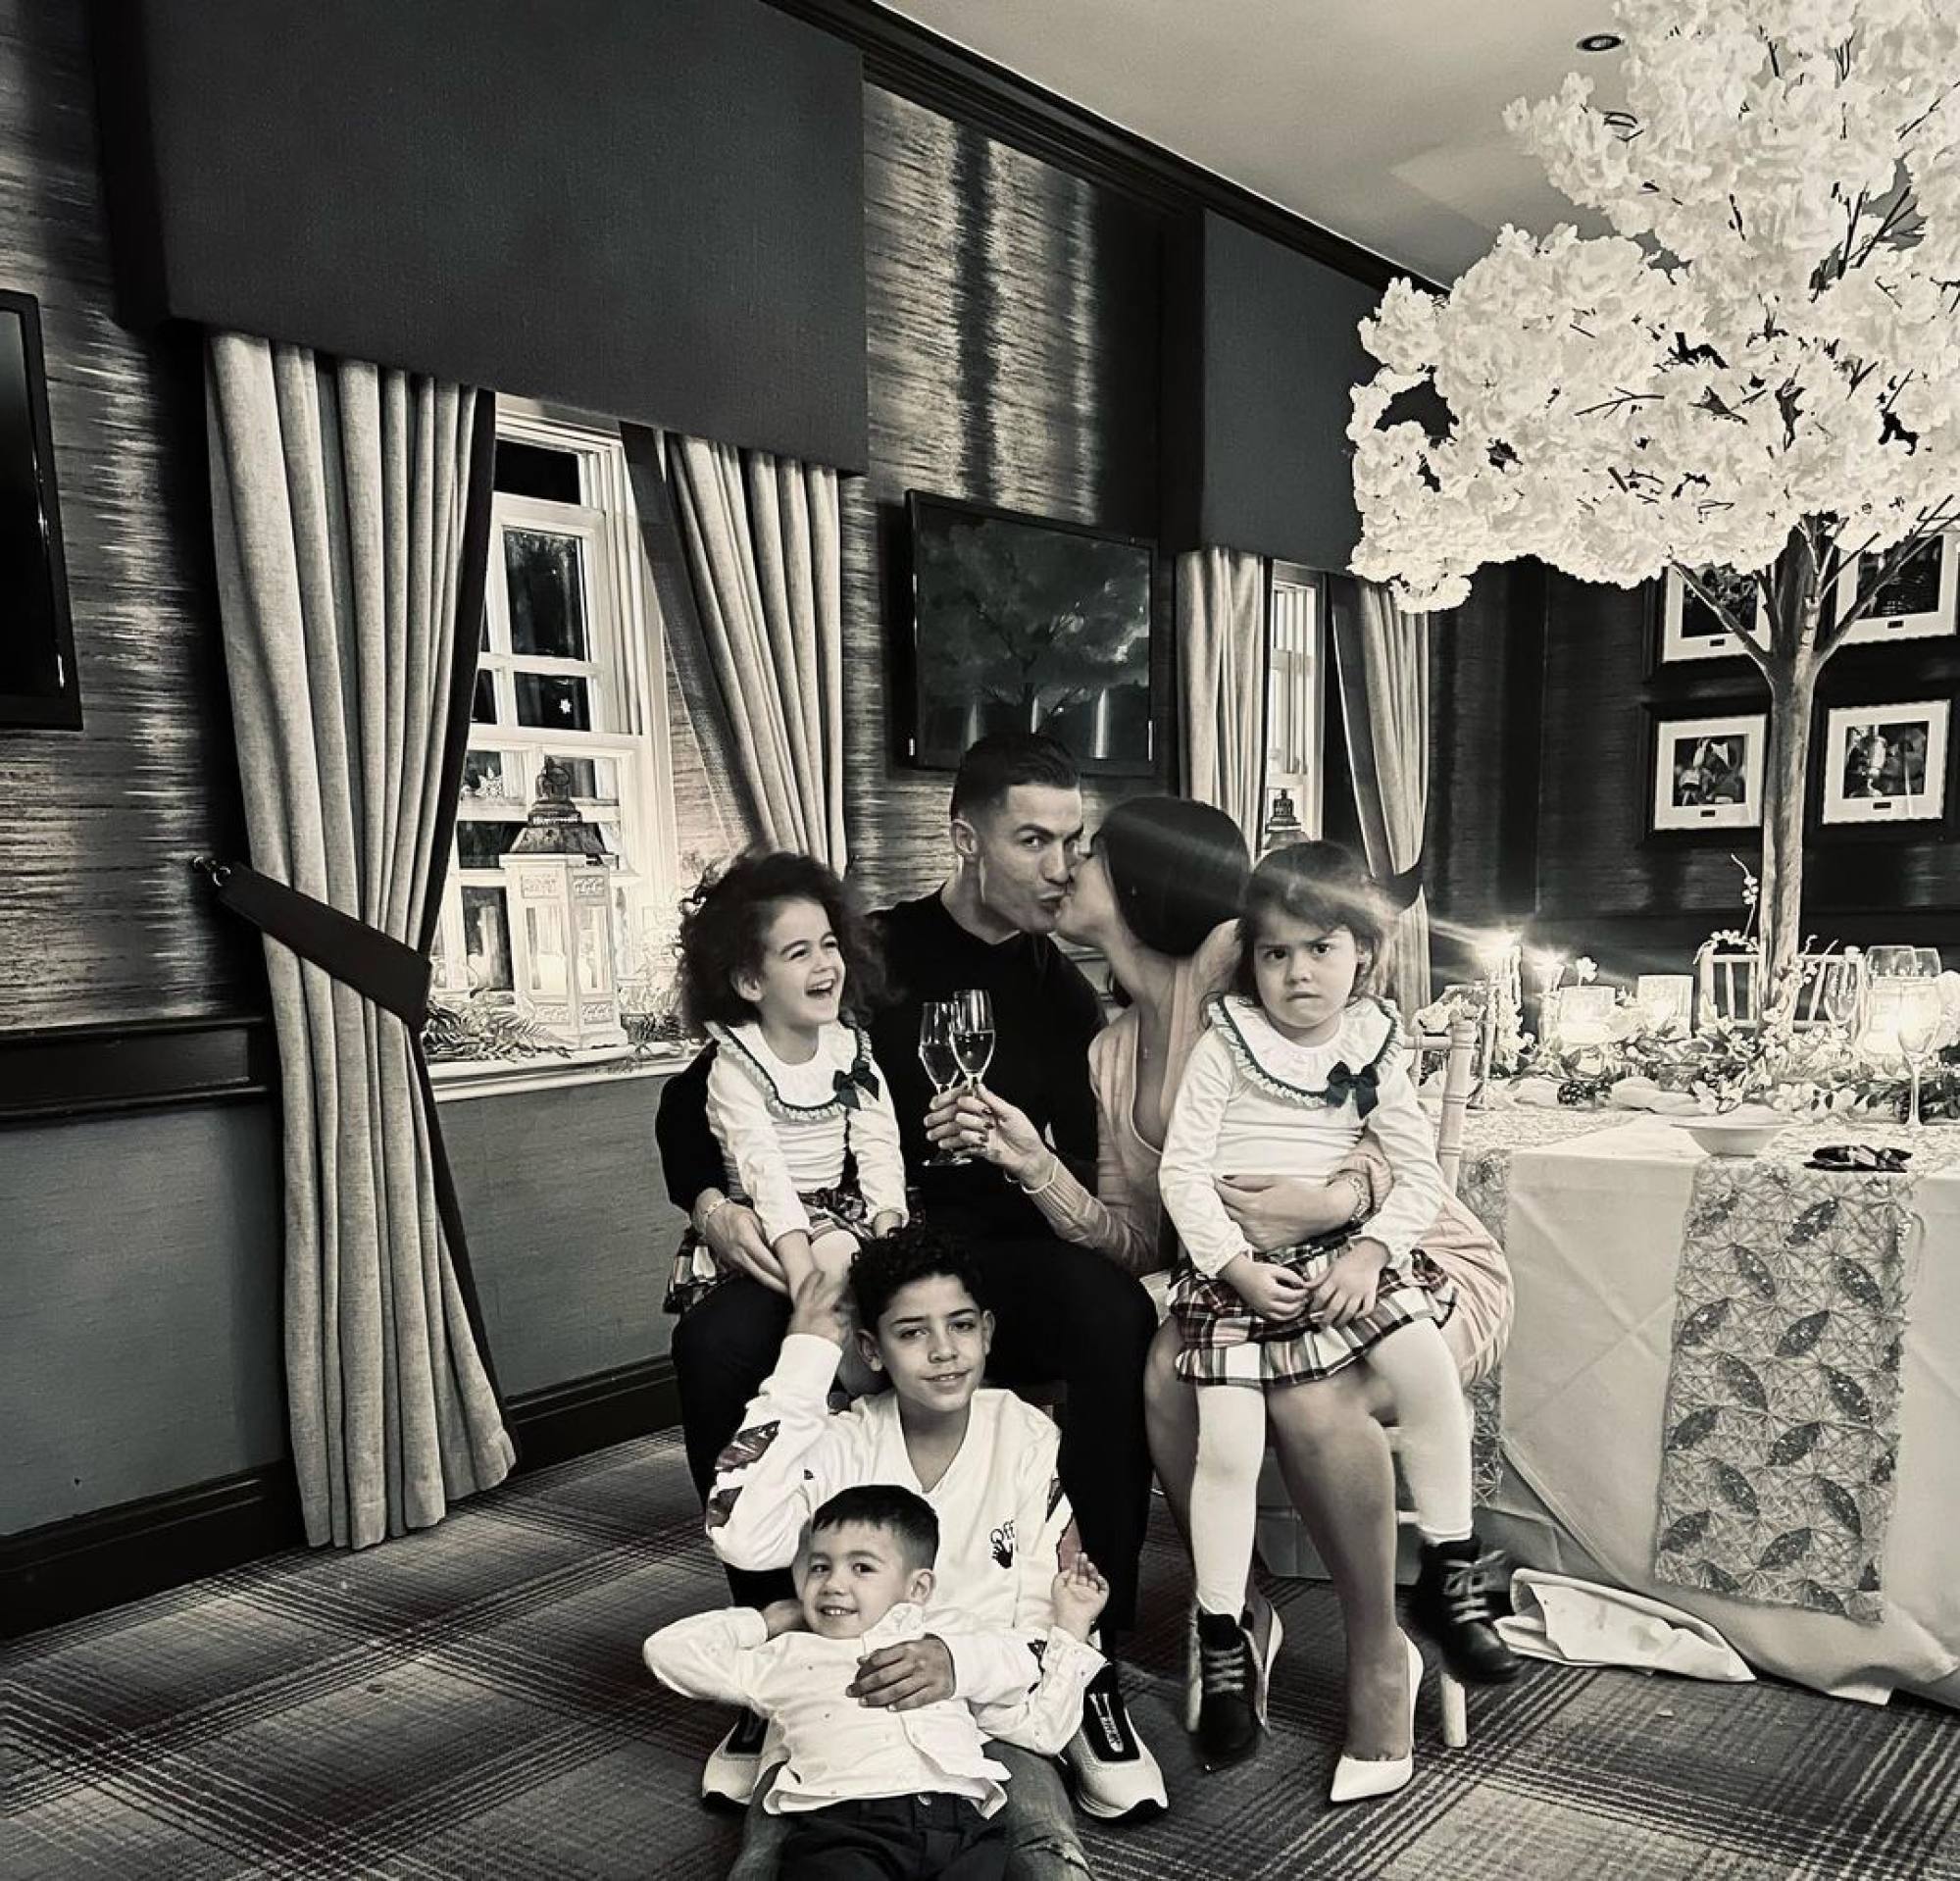 Cristiano Ronaldo wife loves Yeezys despite her husband being